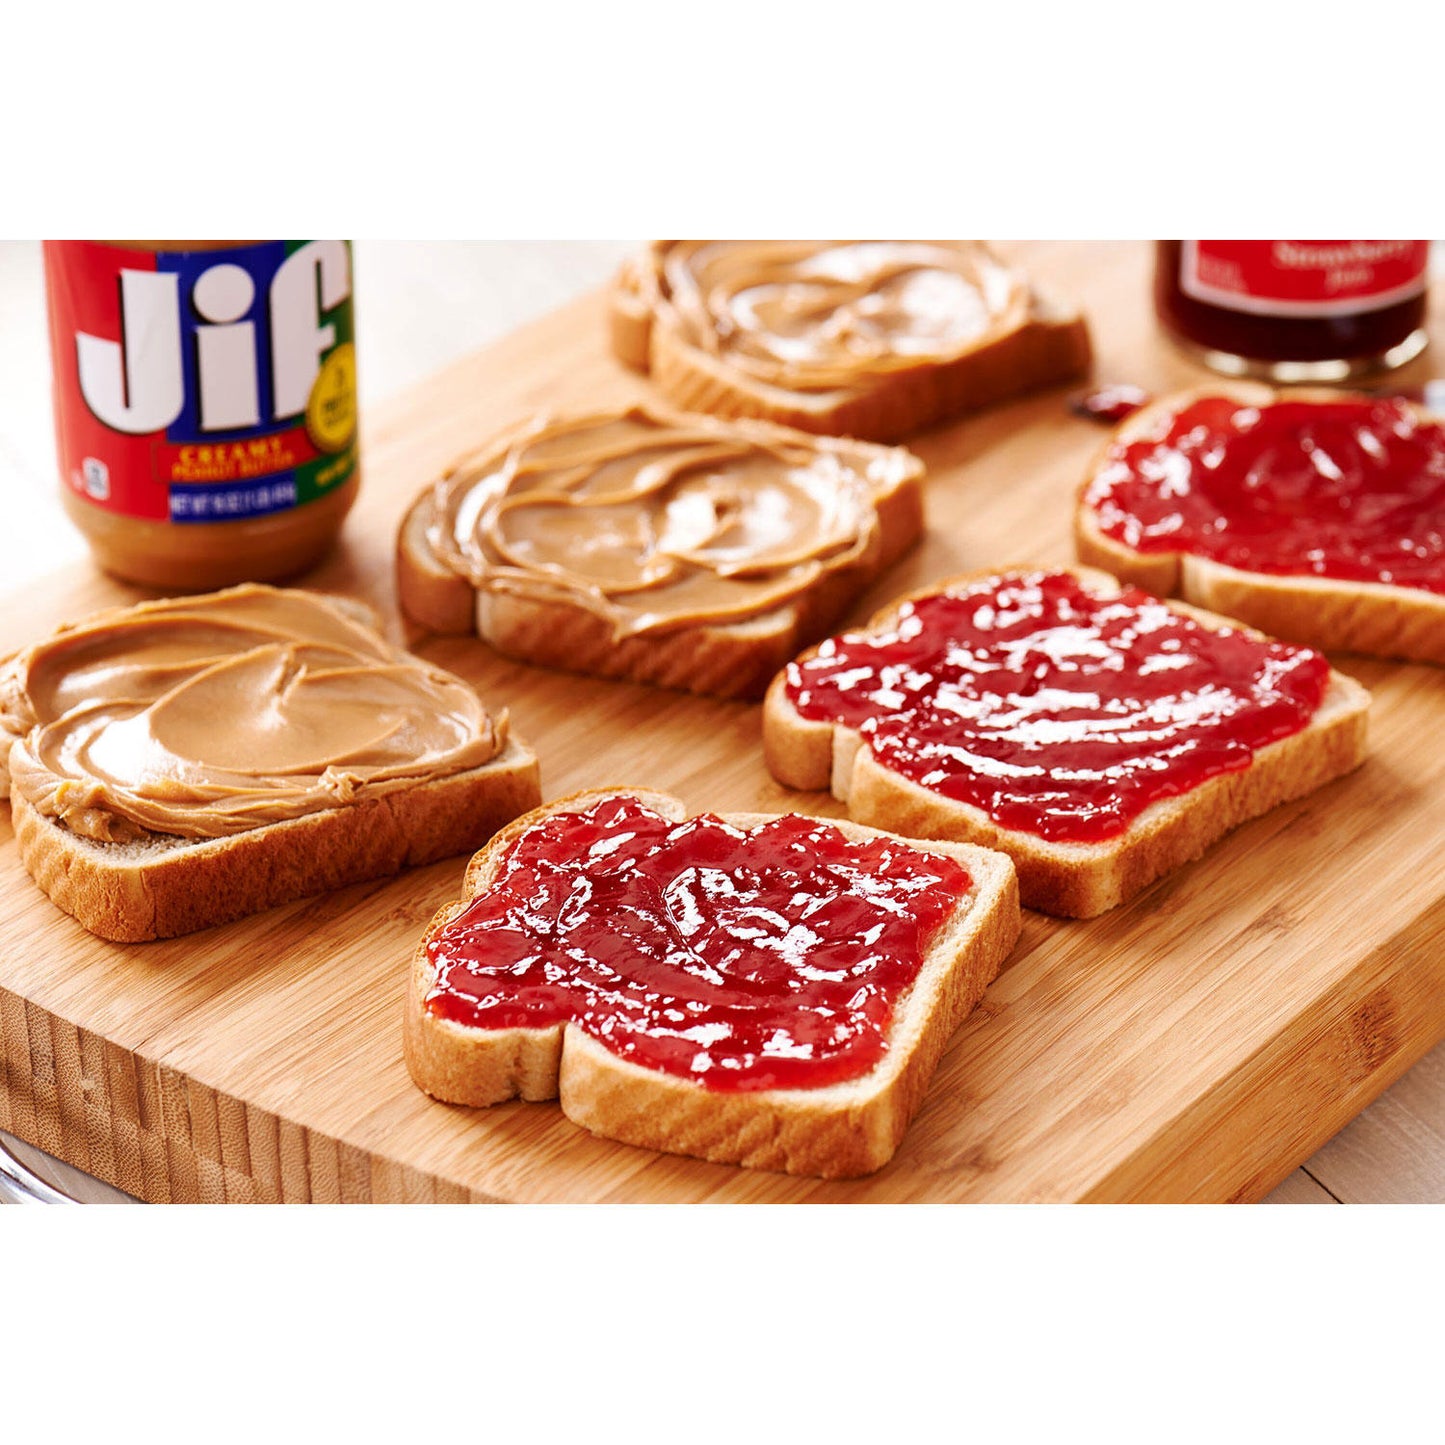 Jif Creamy Peanut Butter (48 oz., 2 pk.)